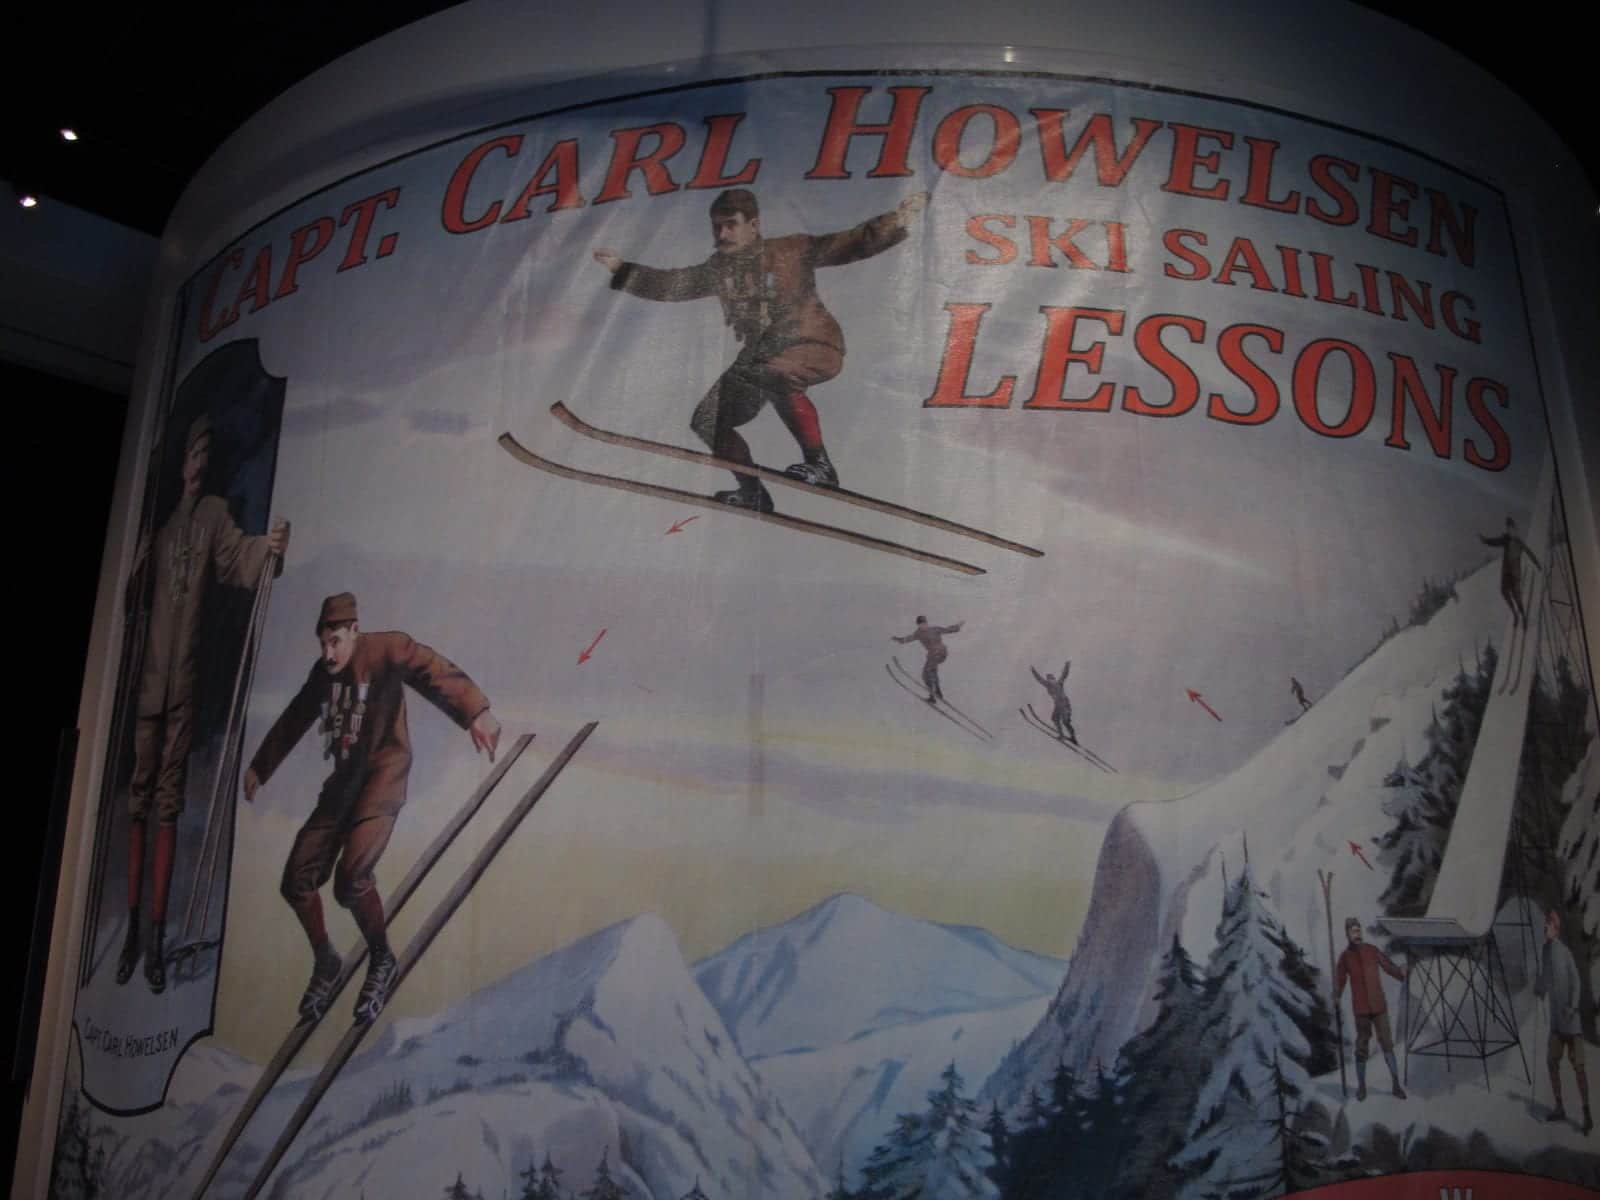 Capt. Carl Howelsen Ski Sailing Lessons, History Colorado Center